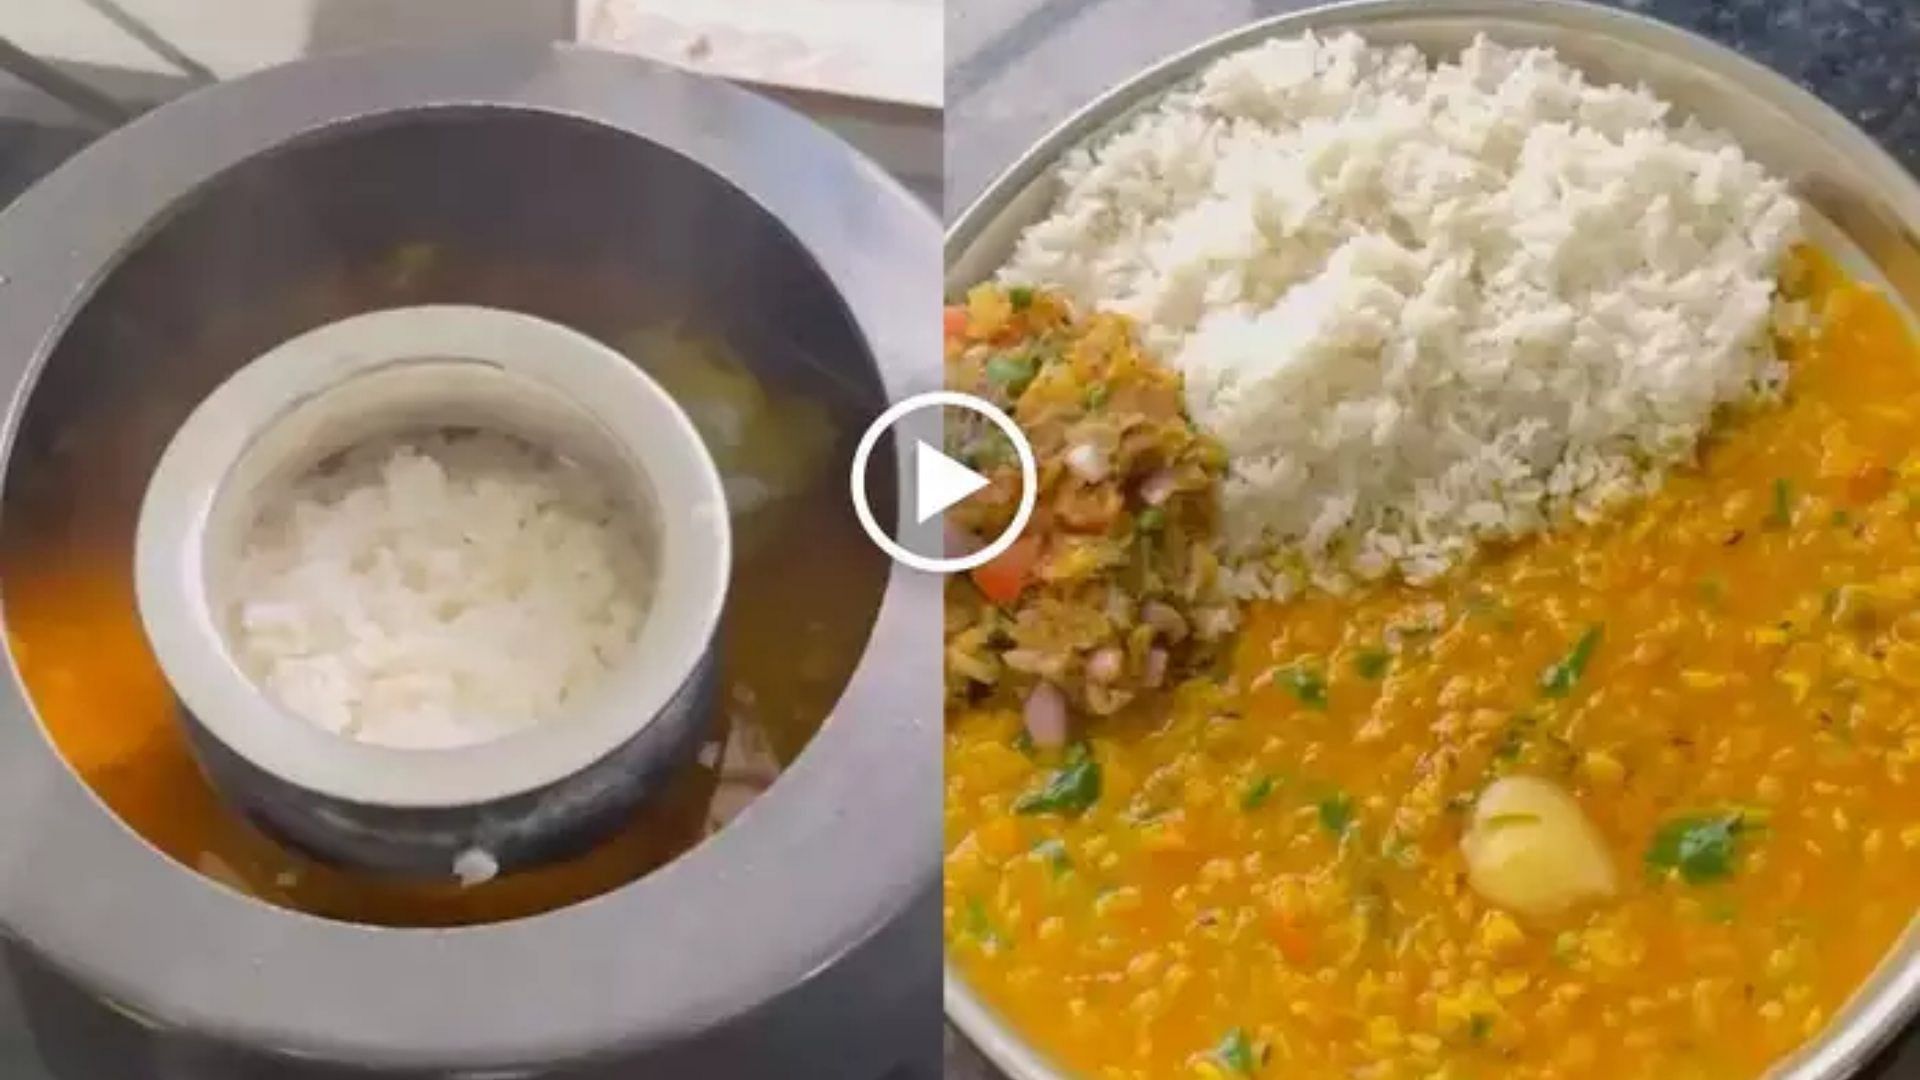 Viral News: Desi Jugad Video Of Preparing Food In 10 Minutes During Student Life